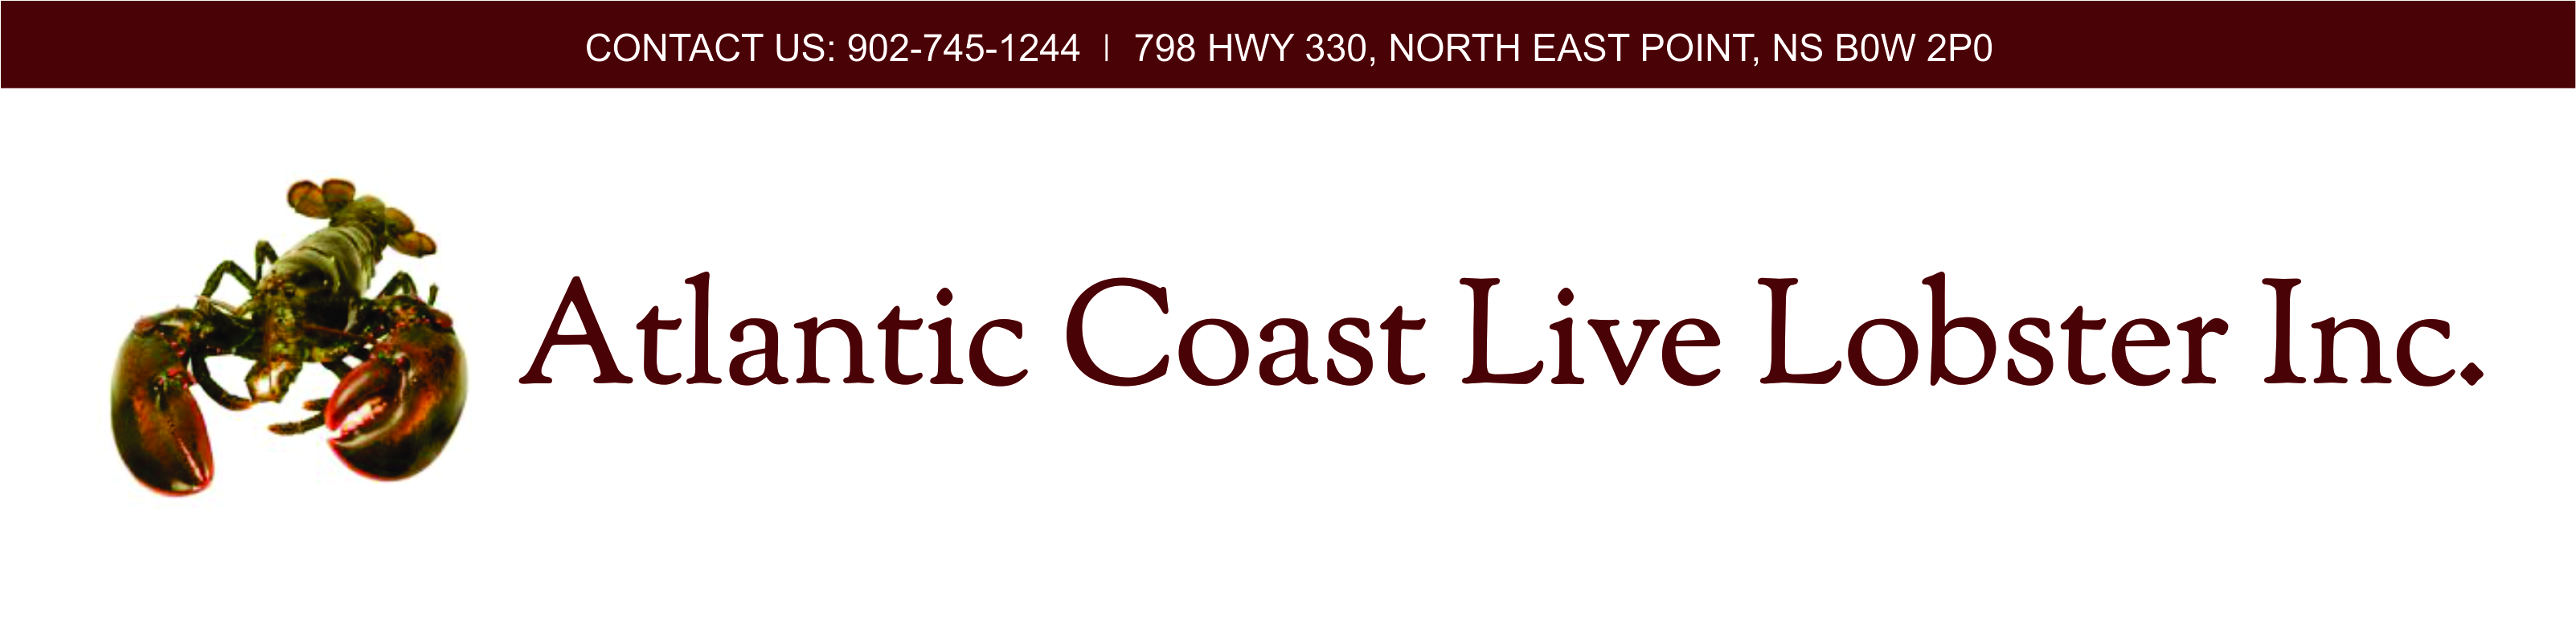 Atlantic Coast Live Lobster